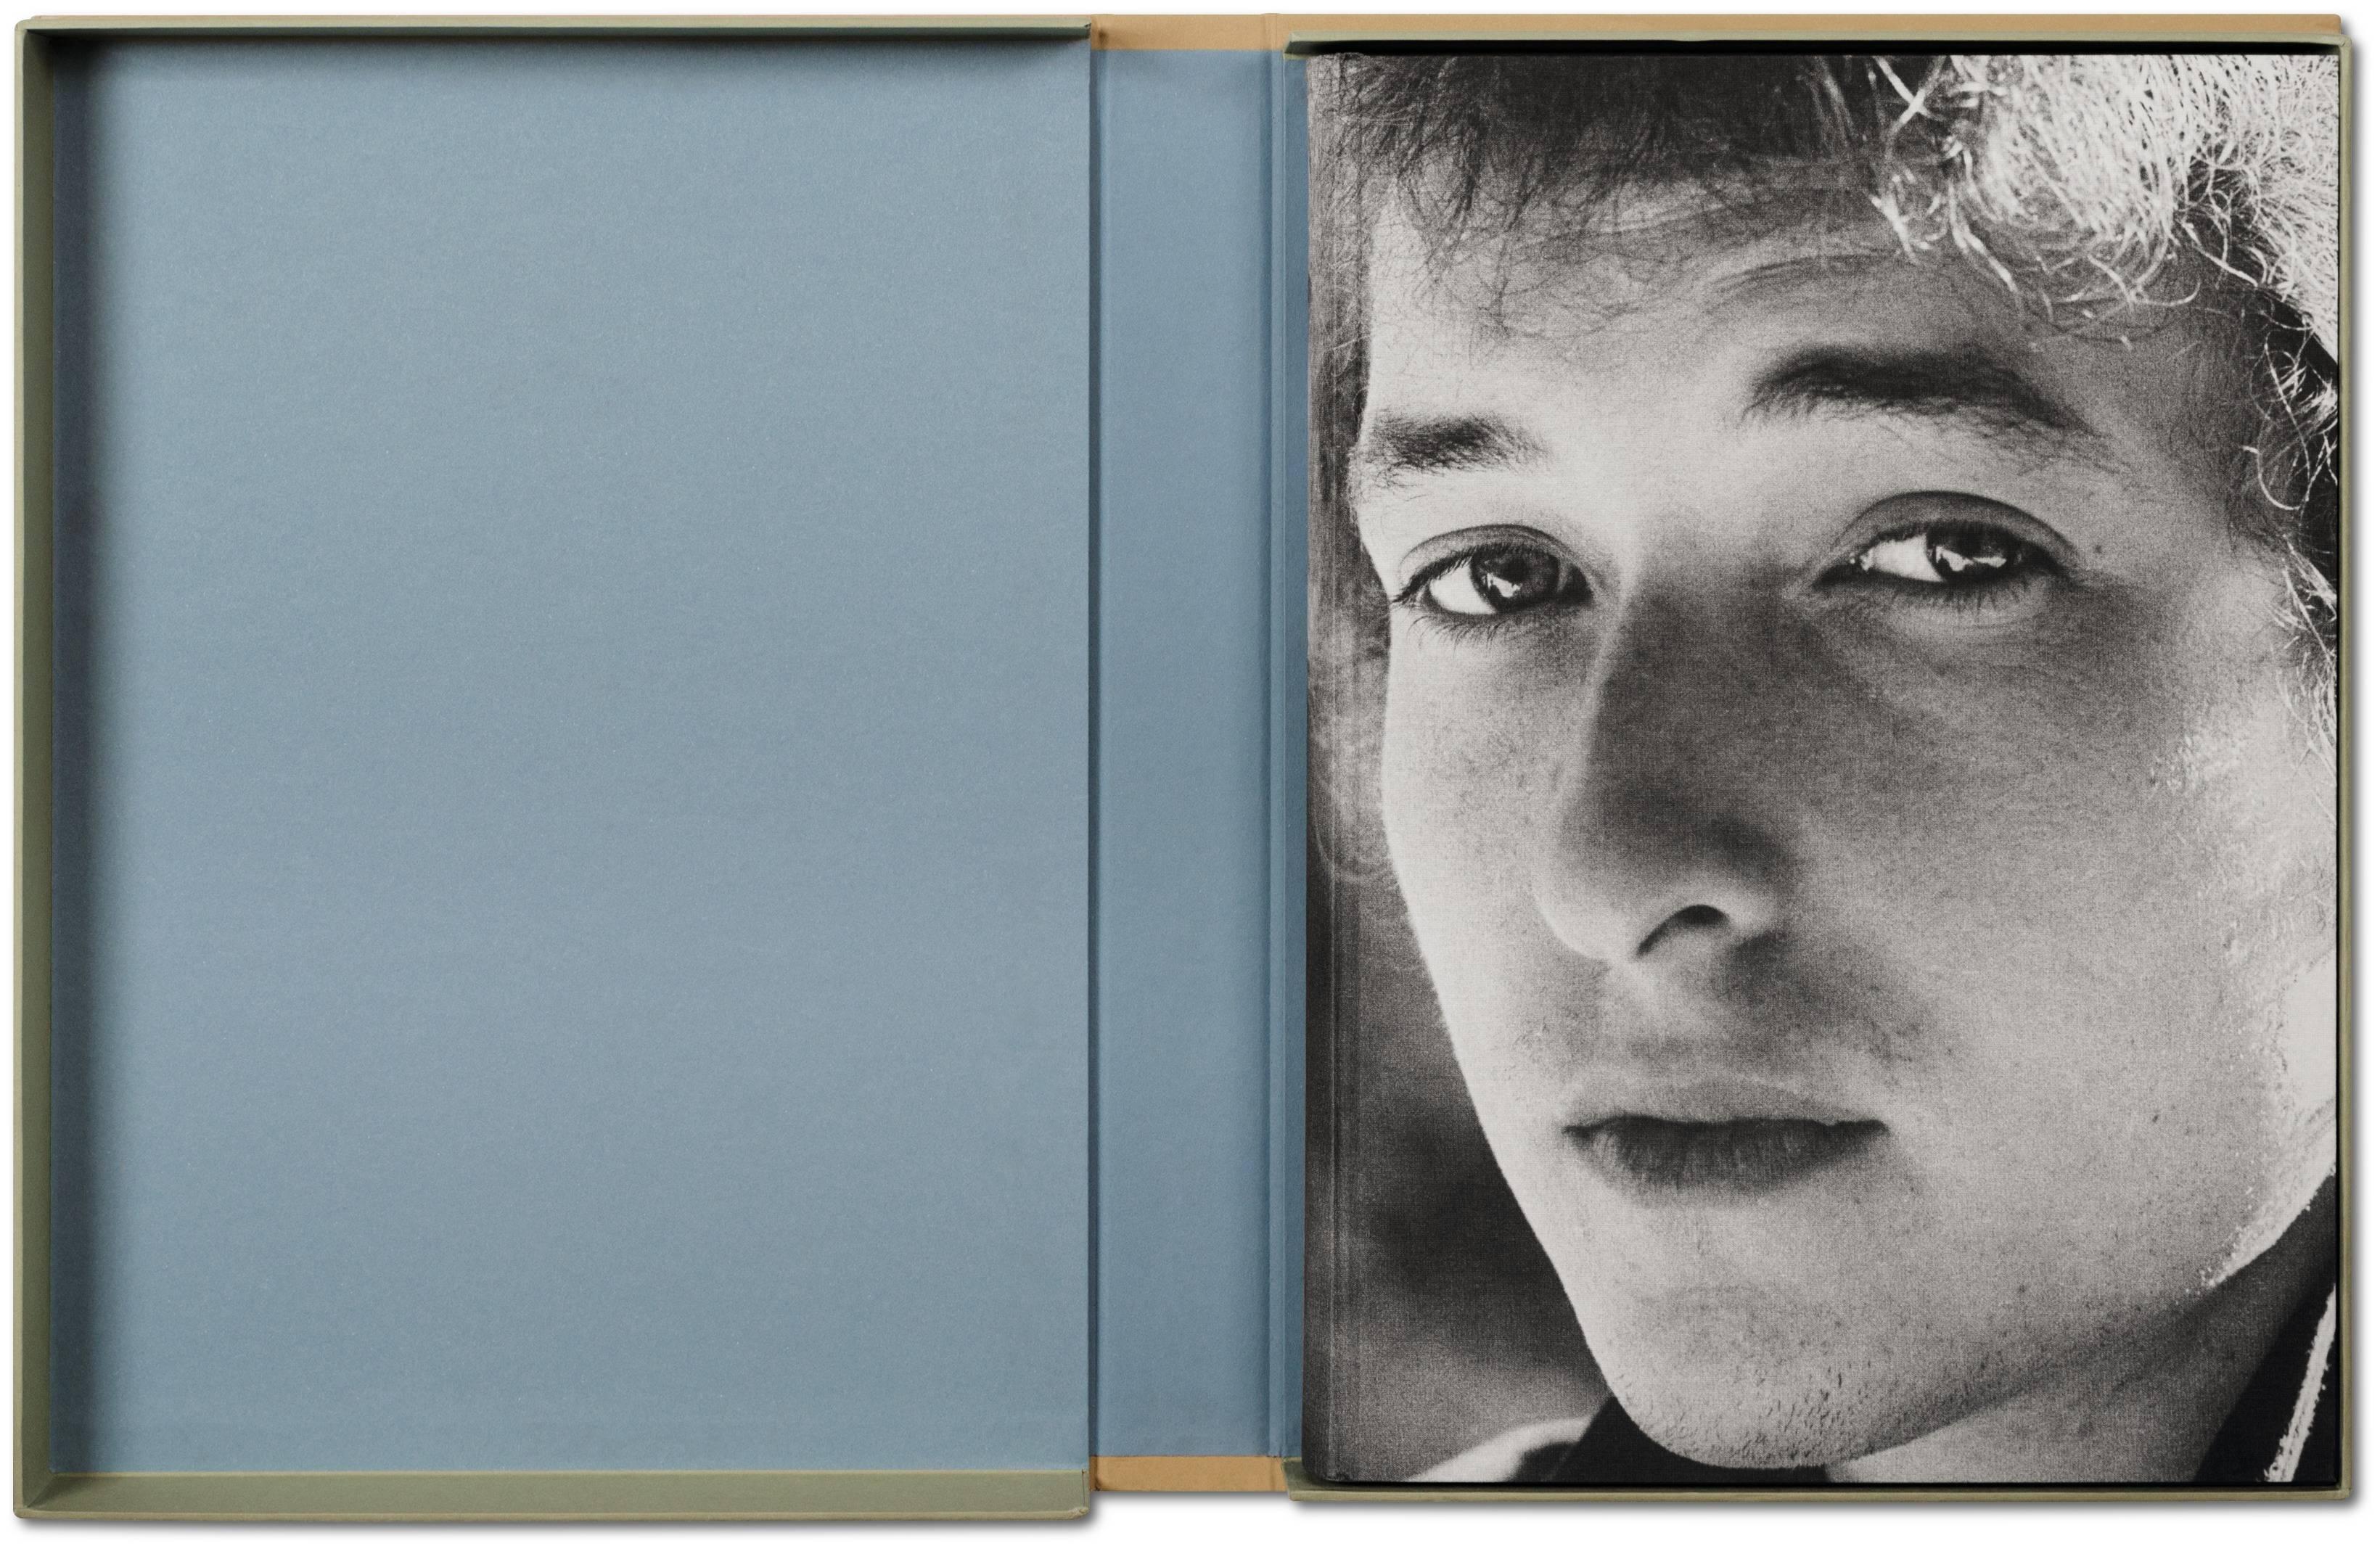 European Daniel Kramer, Bob Dylan, Art Edition No. 1-100 ‘Bob Dylan with Dark Glasses, NY